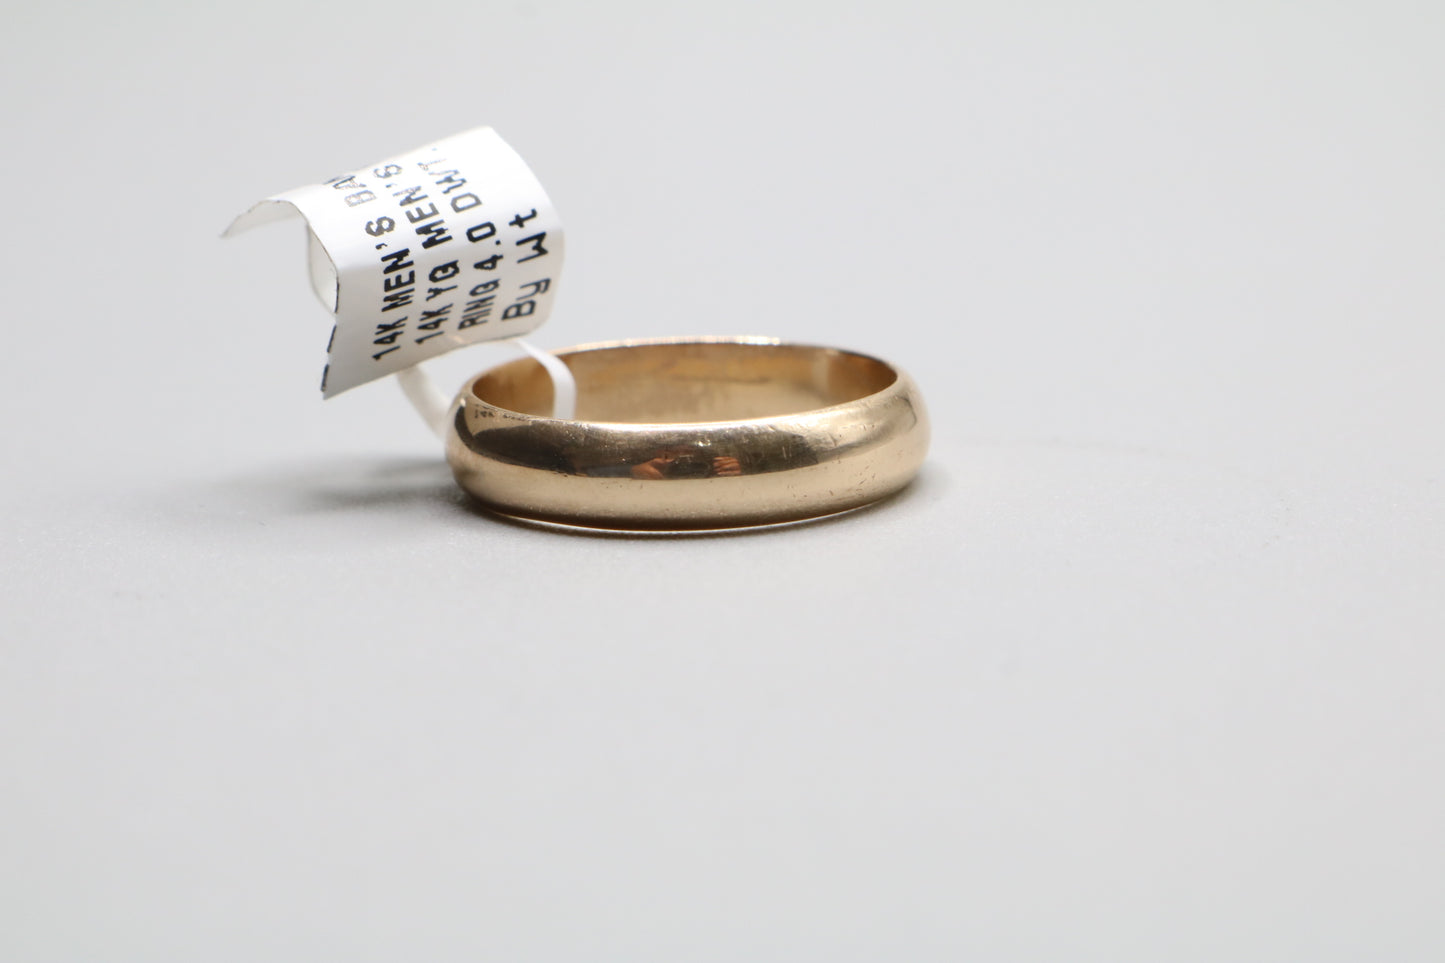 14K Plain Yellow Gold Band Ring (Size 11)